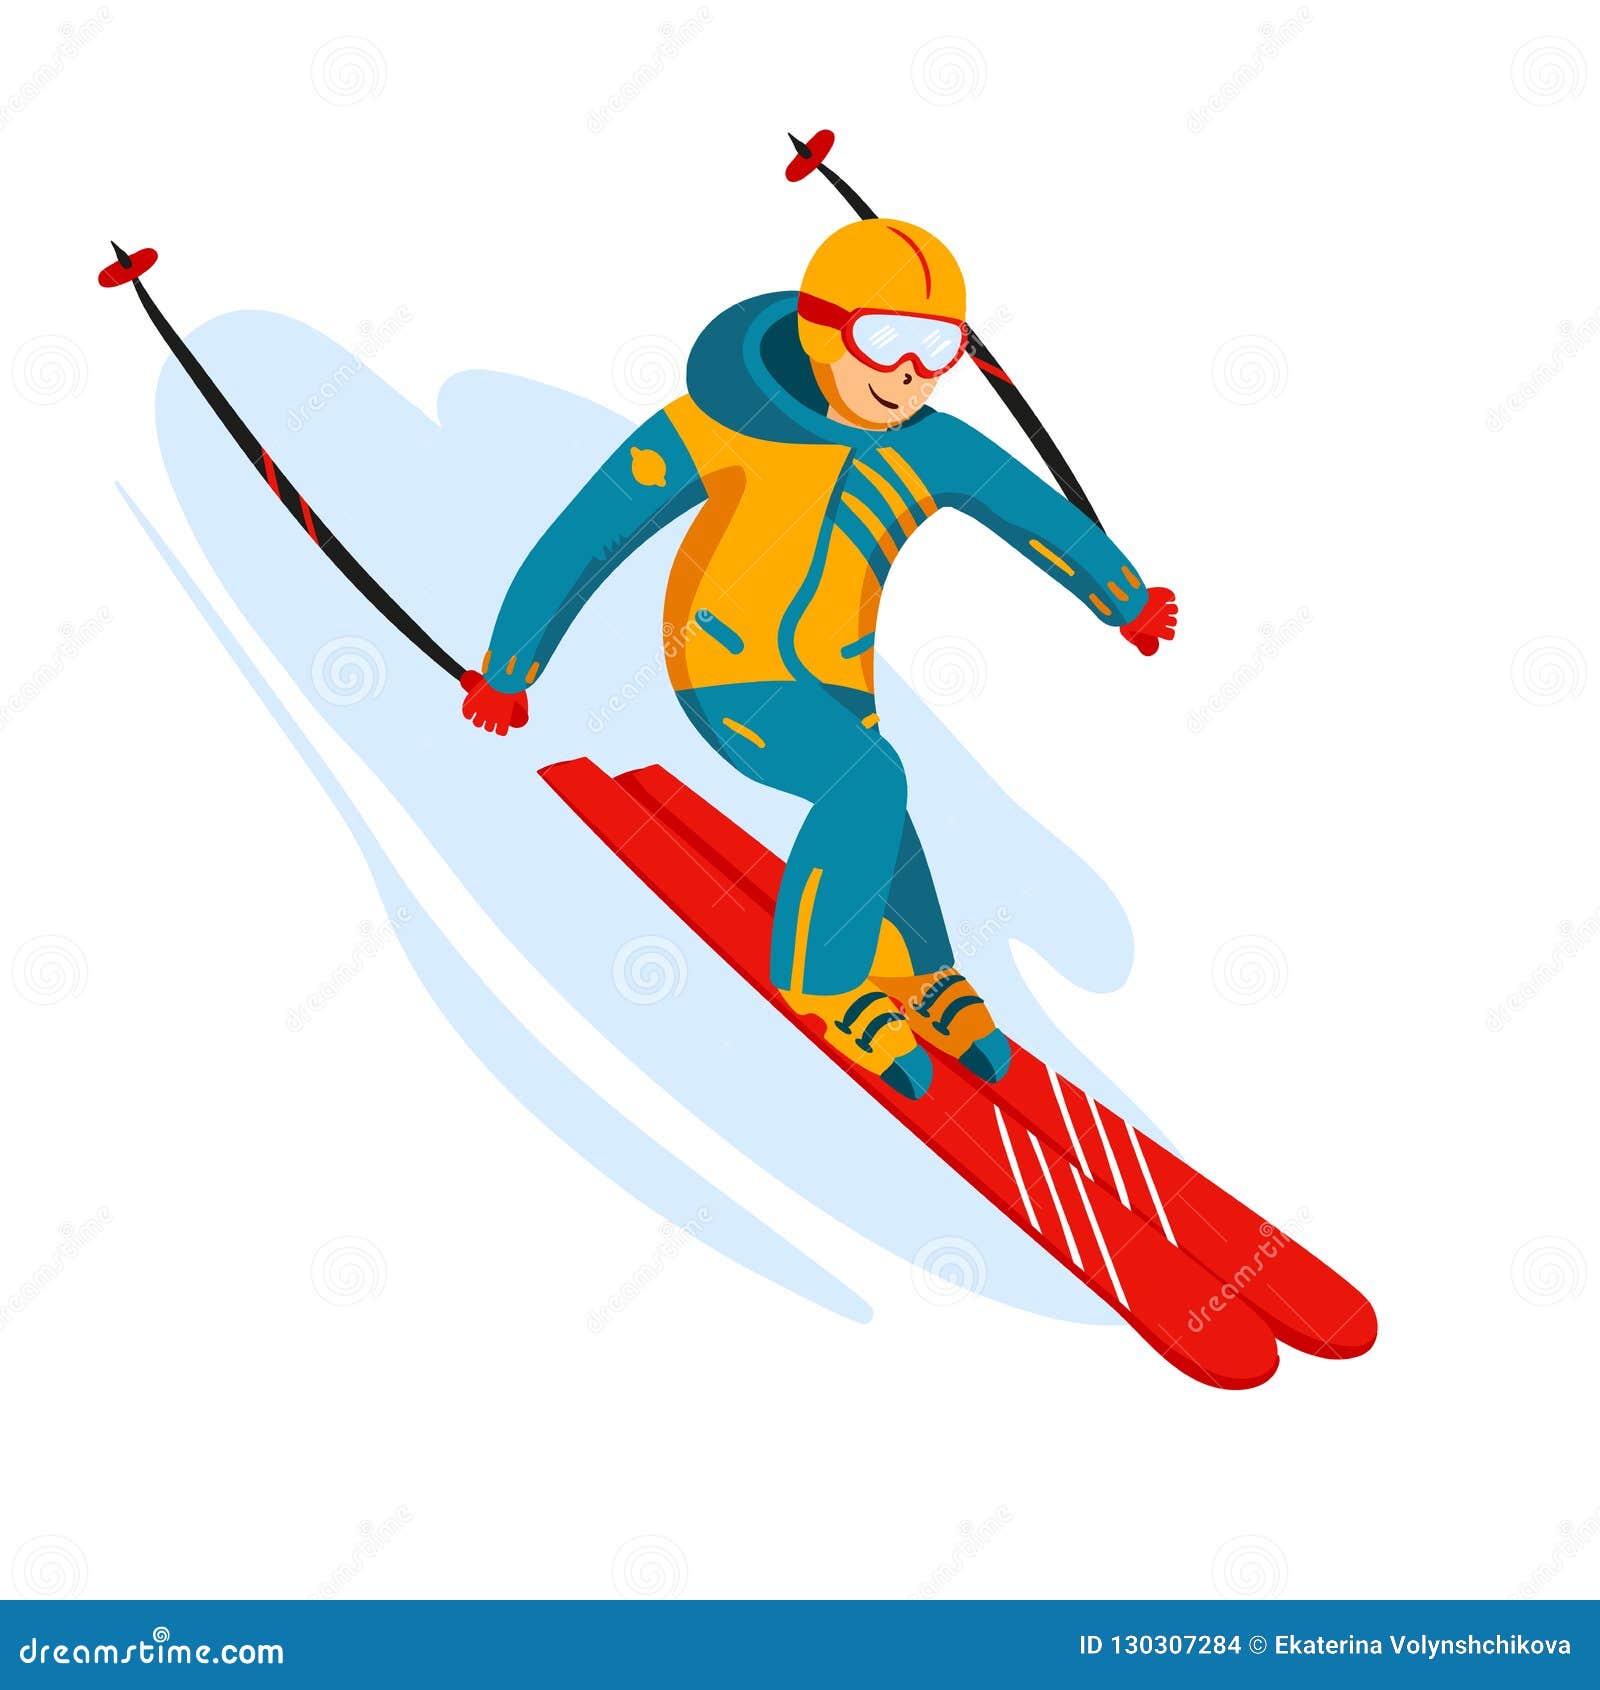 Skiing images cartoon